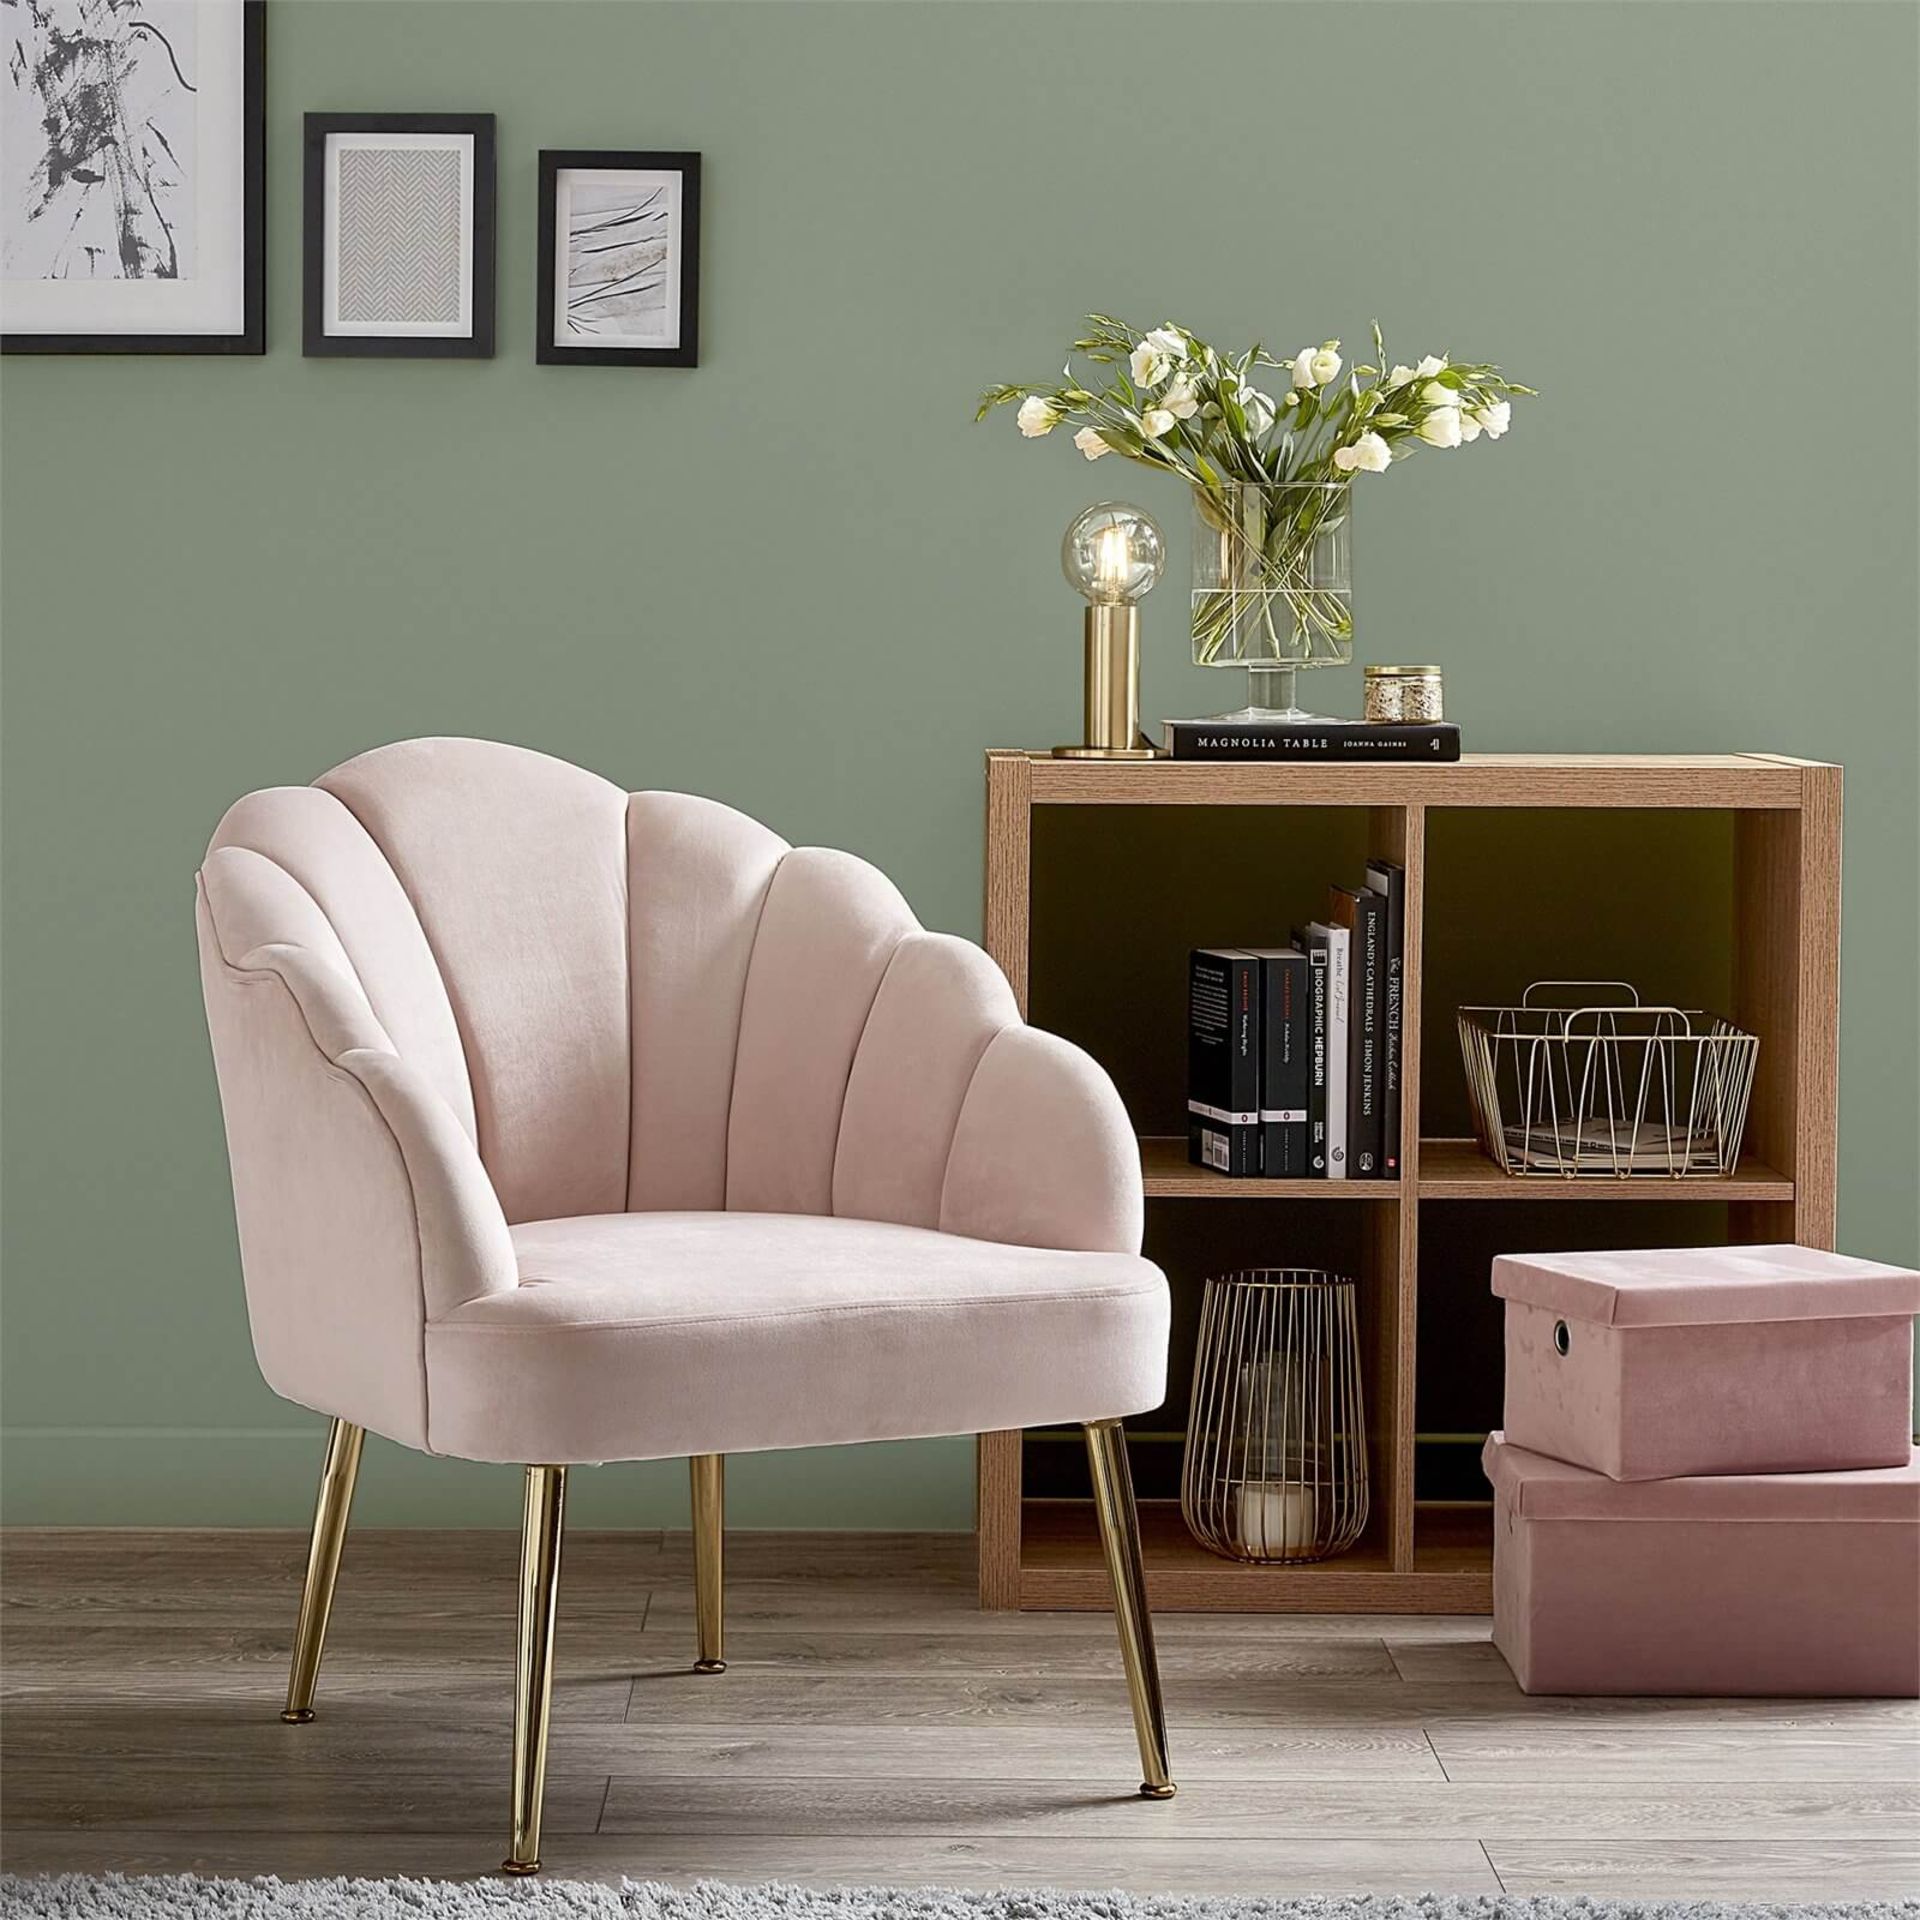 (R3K) 1 X Sophia Occasional Chair Blush. Velvet Fabric Cover. Metal Legs. (H77 x W64 x D71cm) - Image 2 of 3